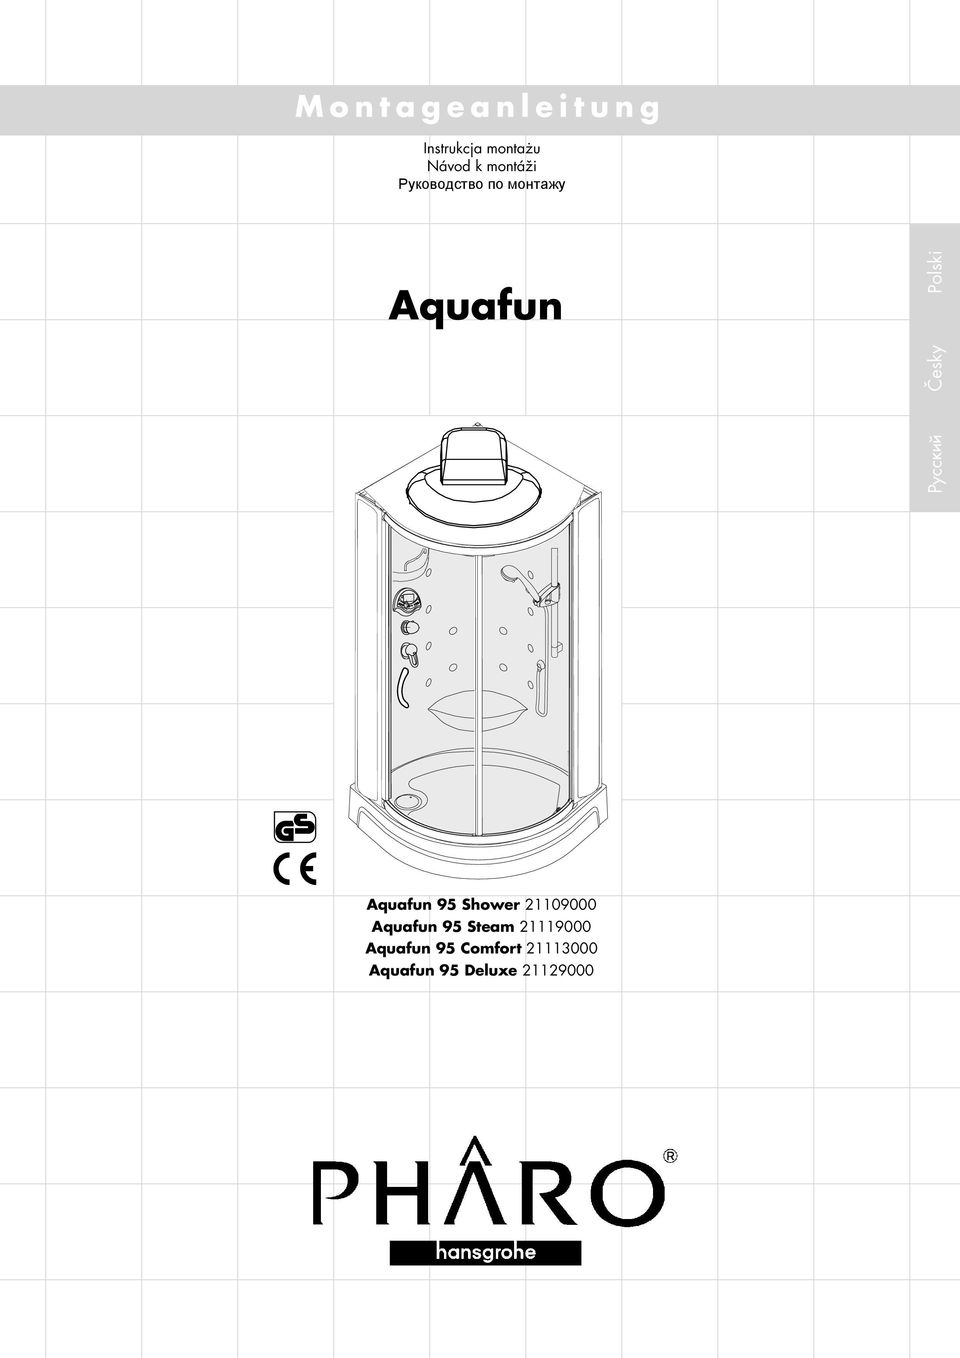 Aquafun Aquafun 95 Shower 209000 Aquafun 95